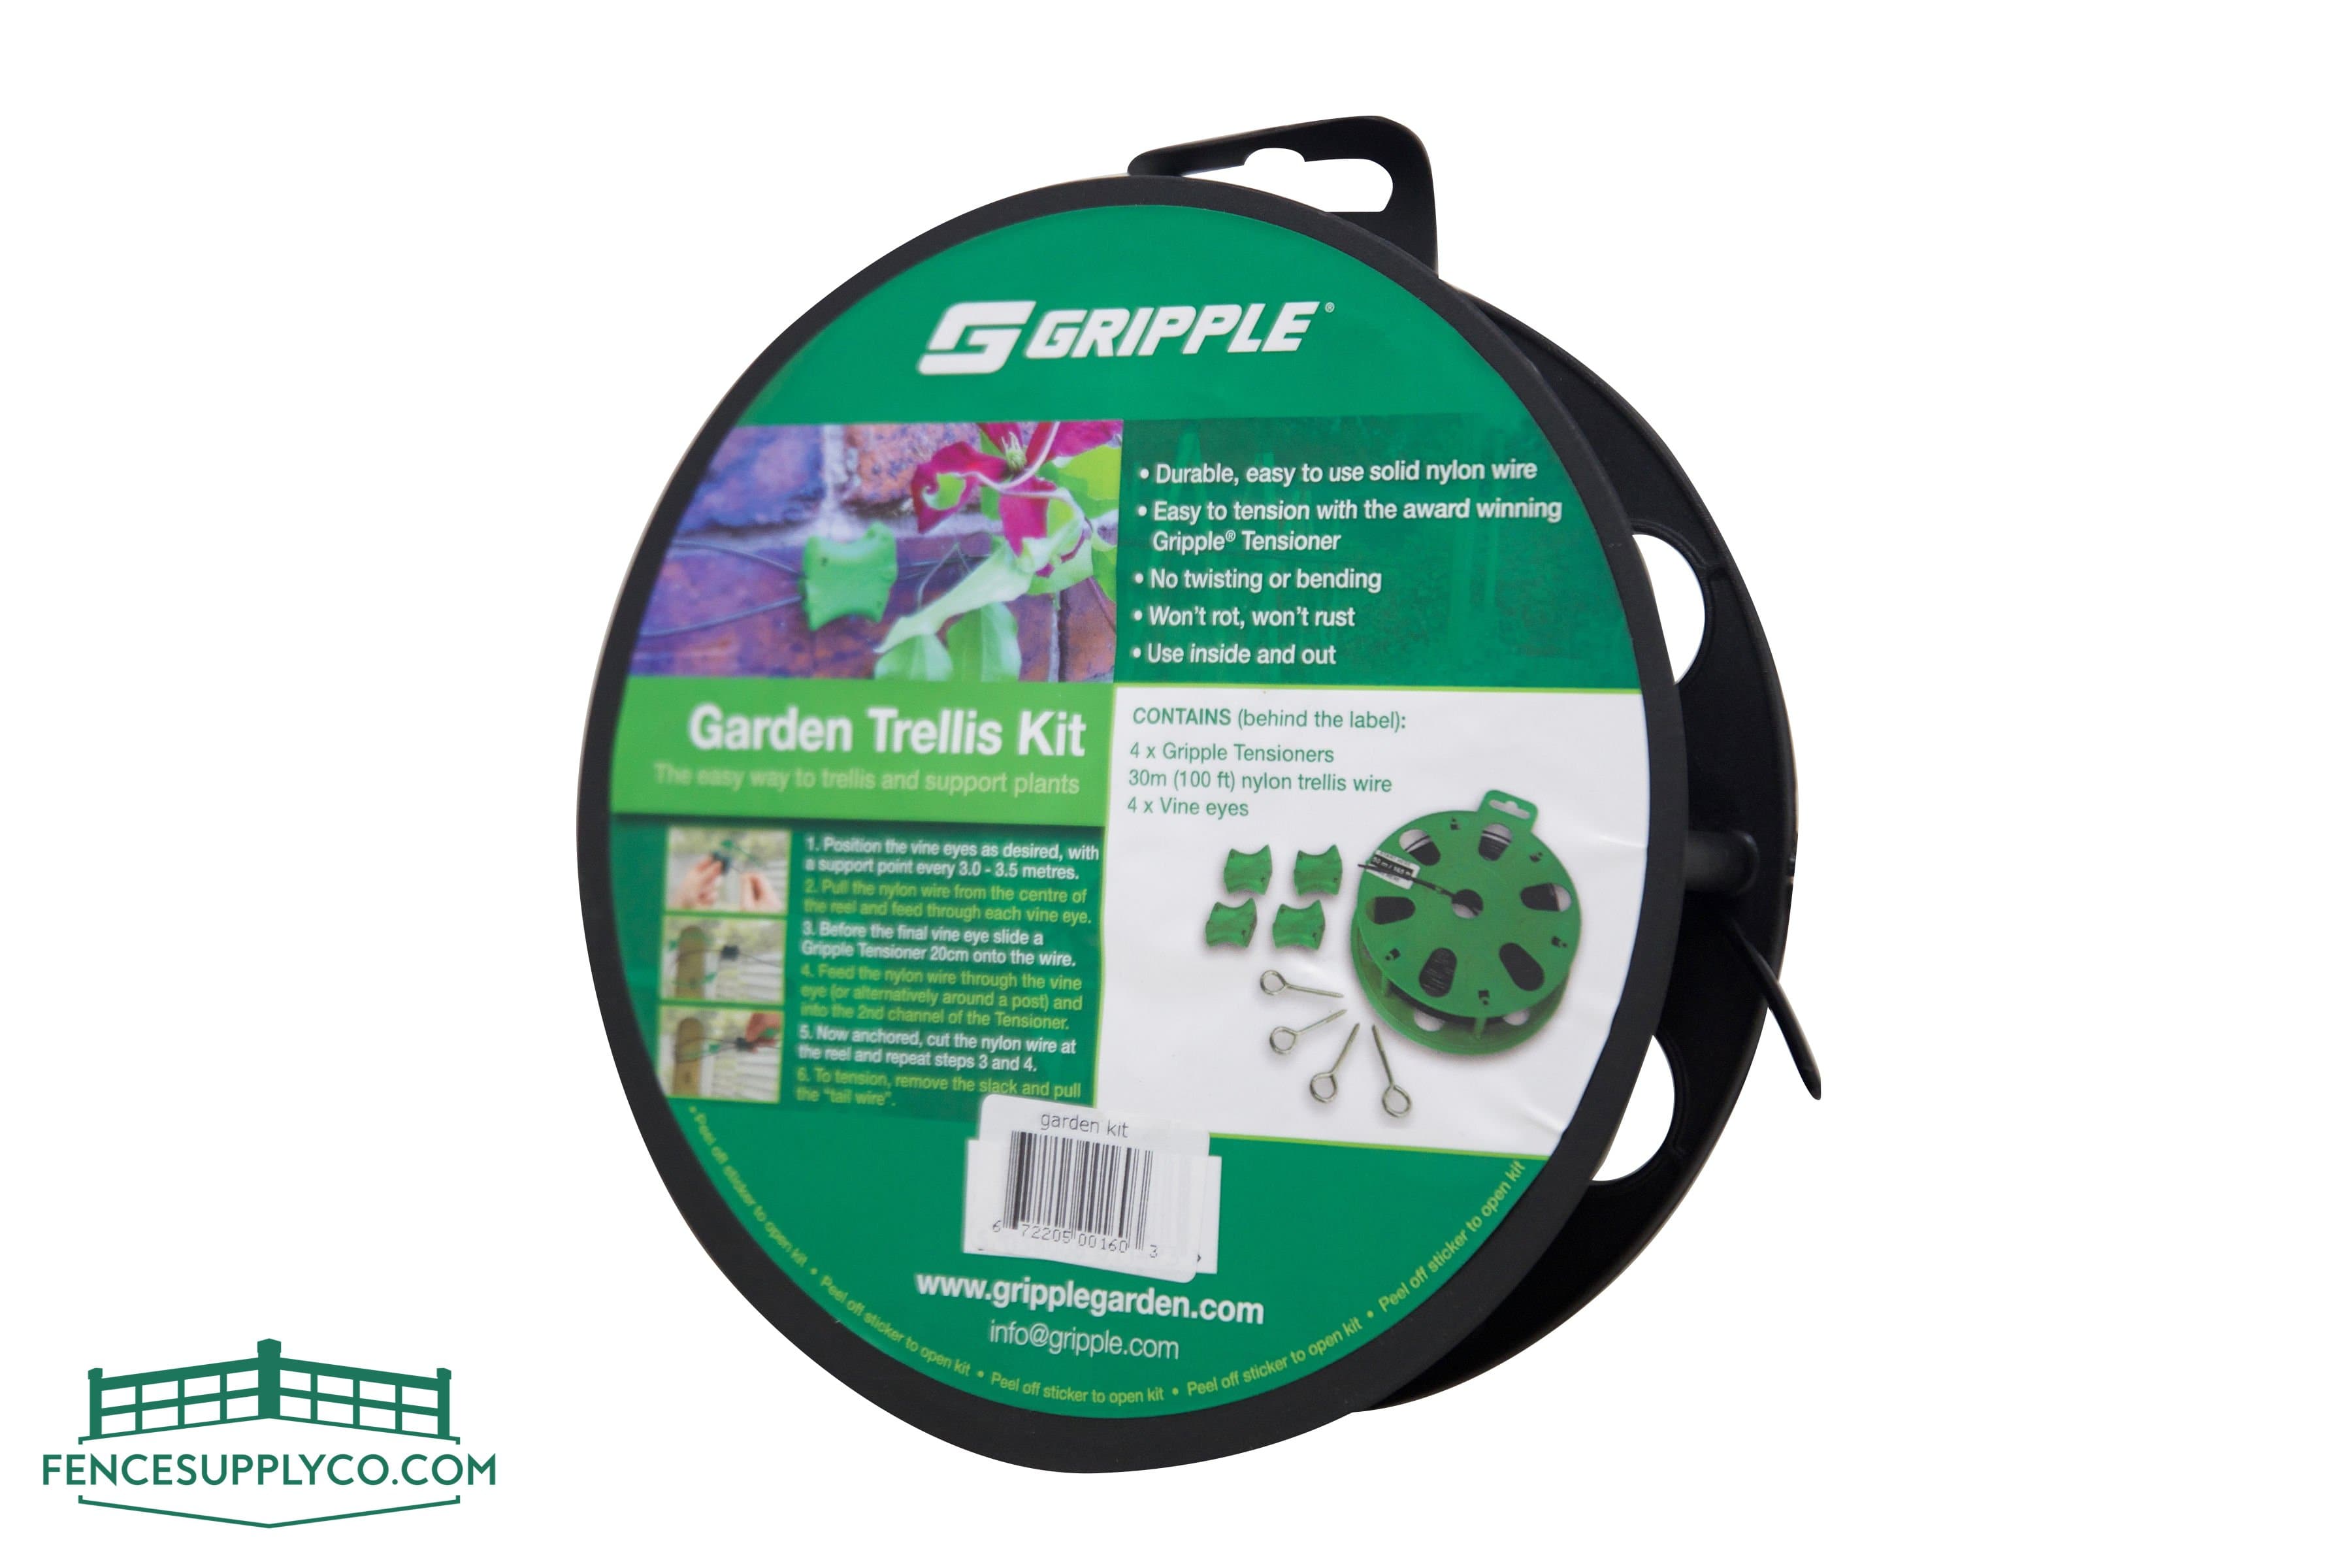 Gripple Garden Trellis Kit, 100FT - FenceSupplyCo.com